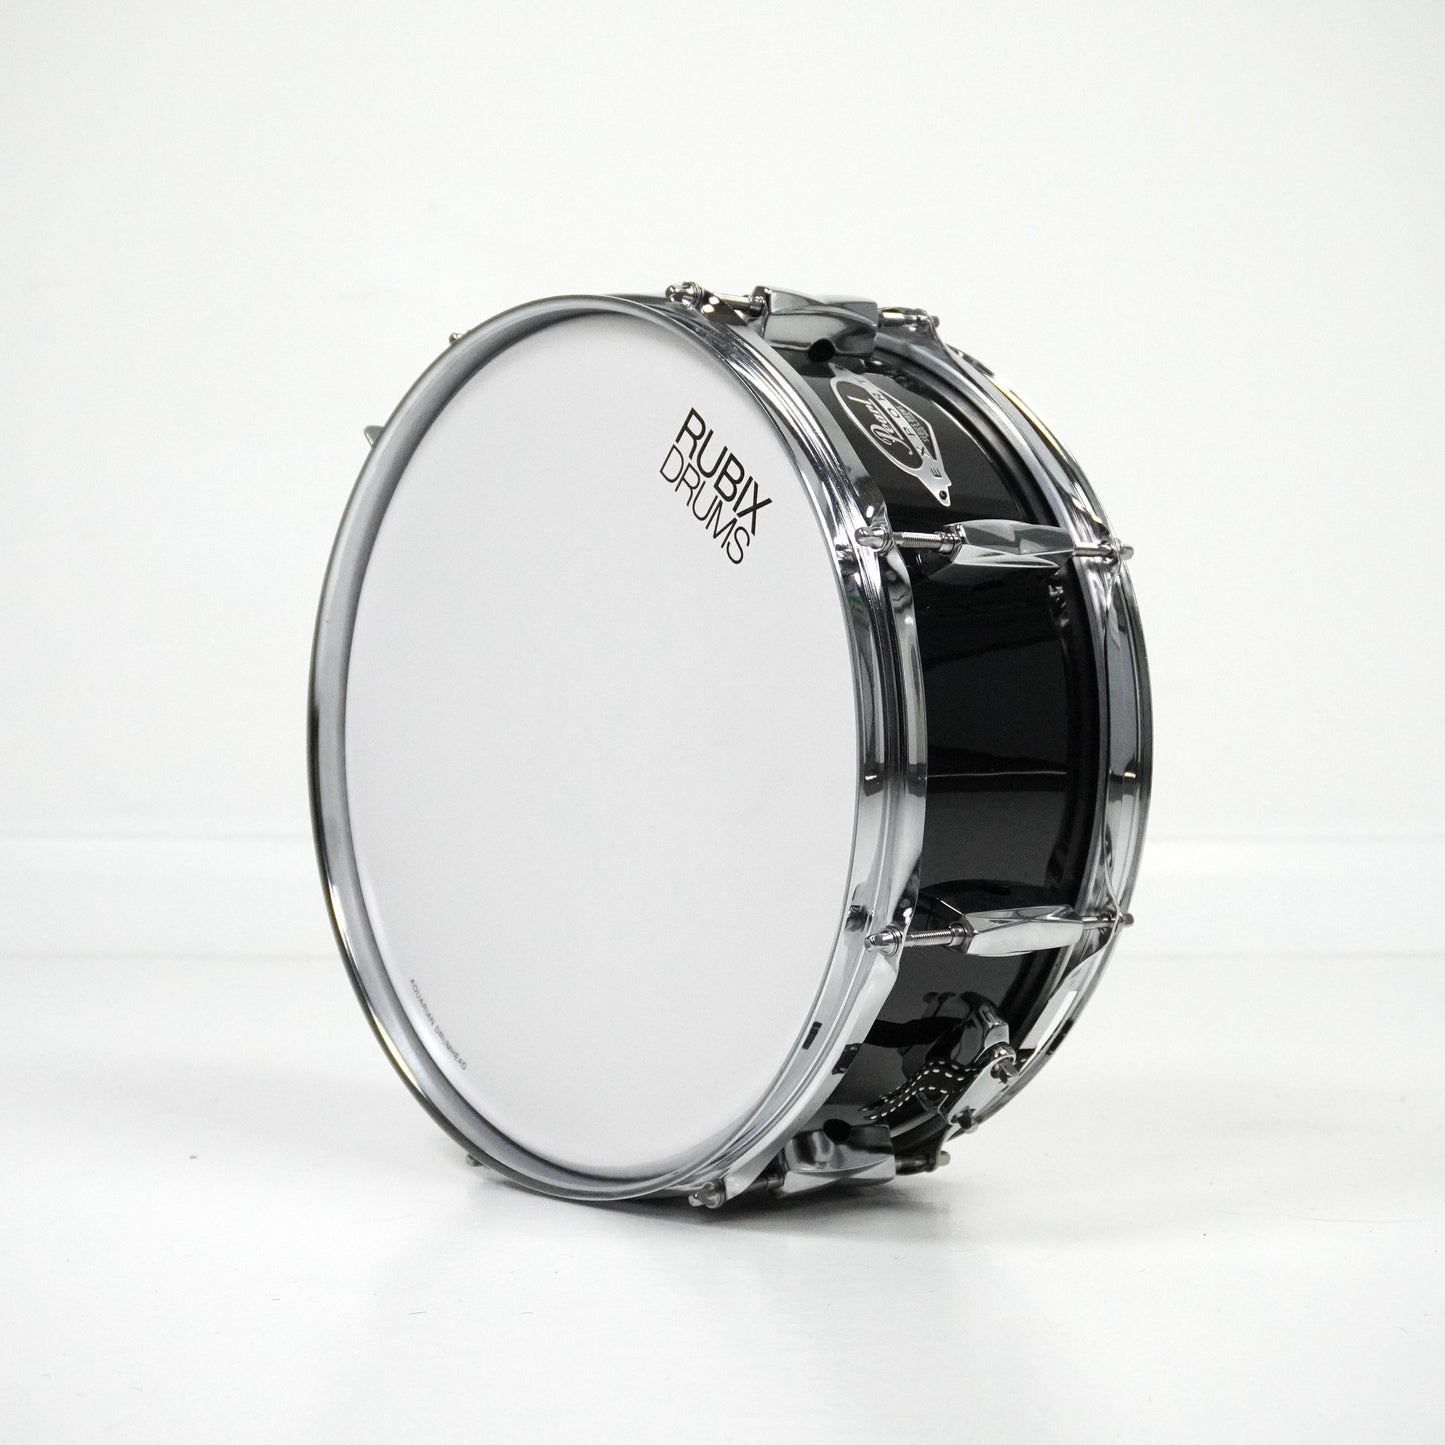 Pearl Export 13” x 5” Snare Drum